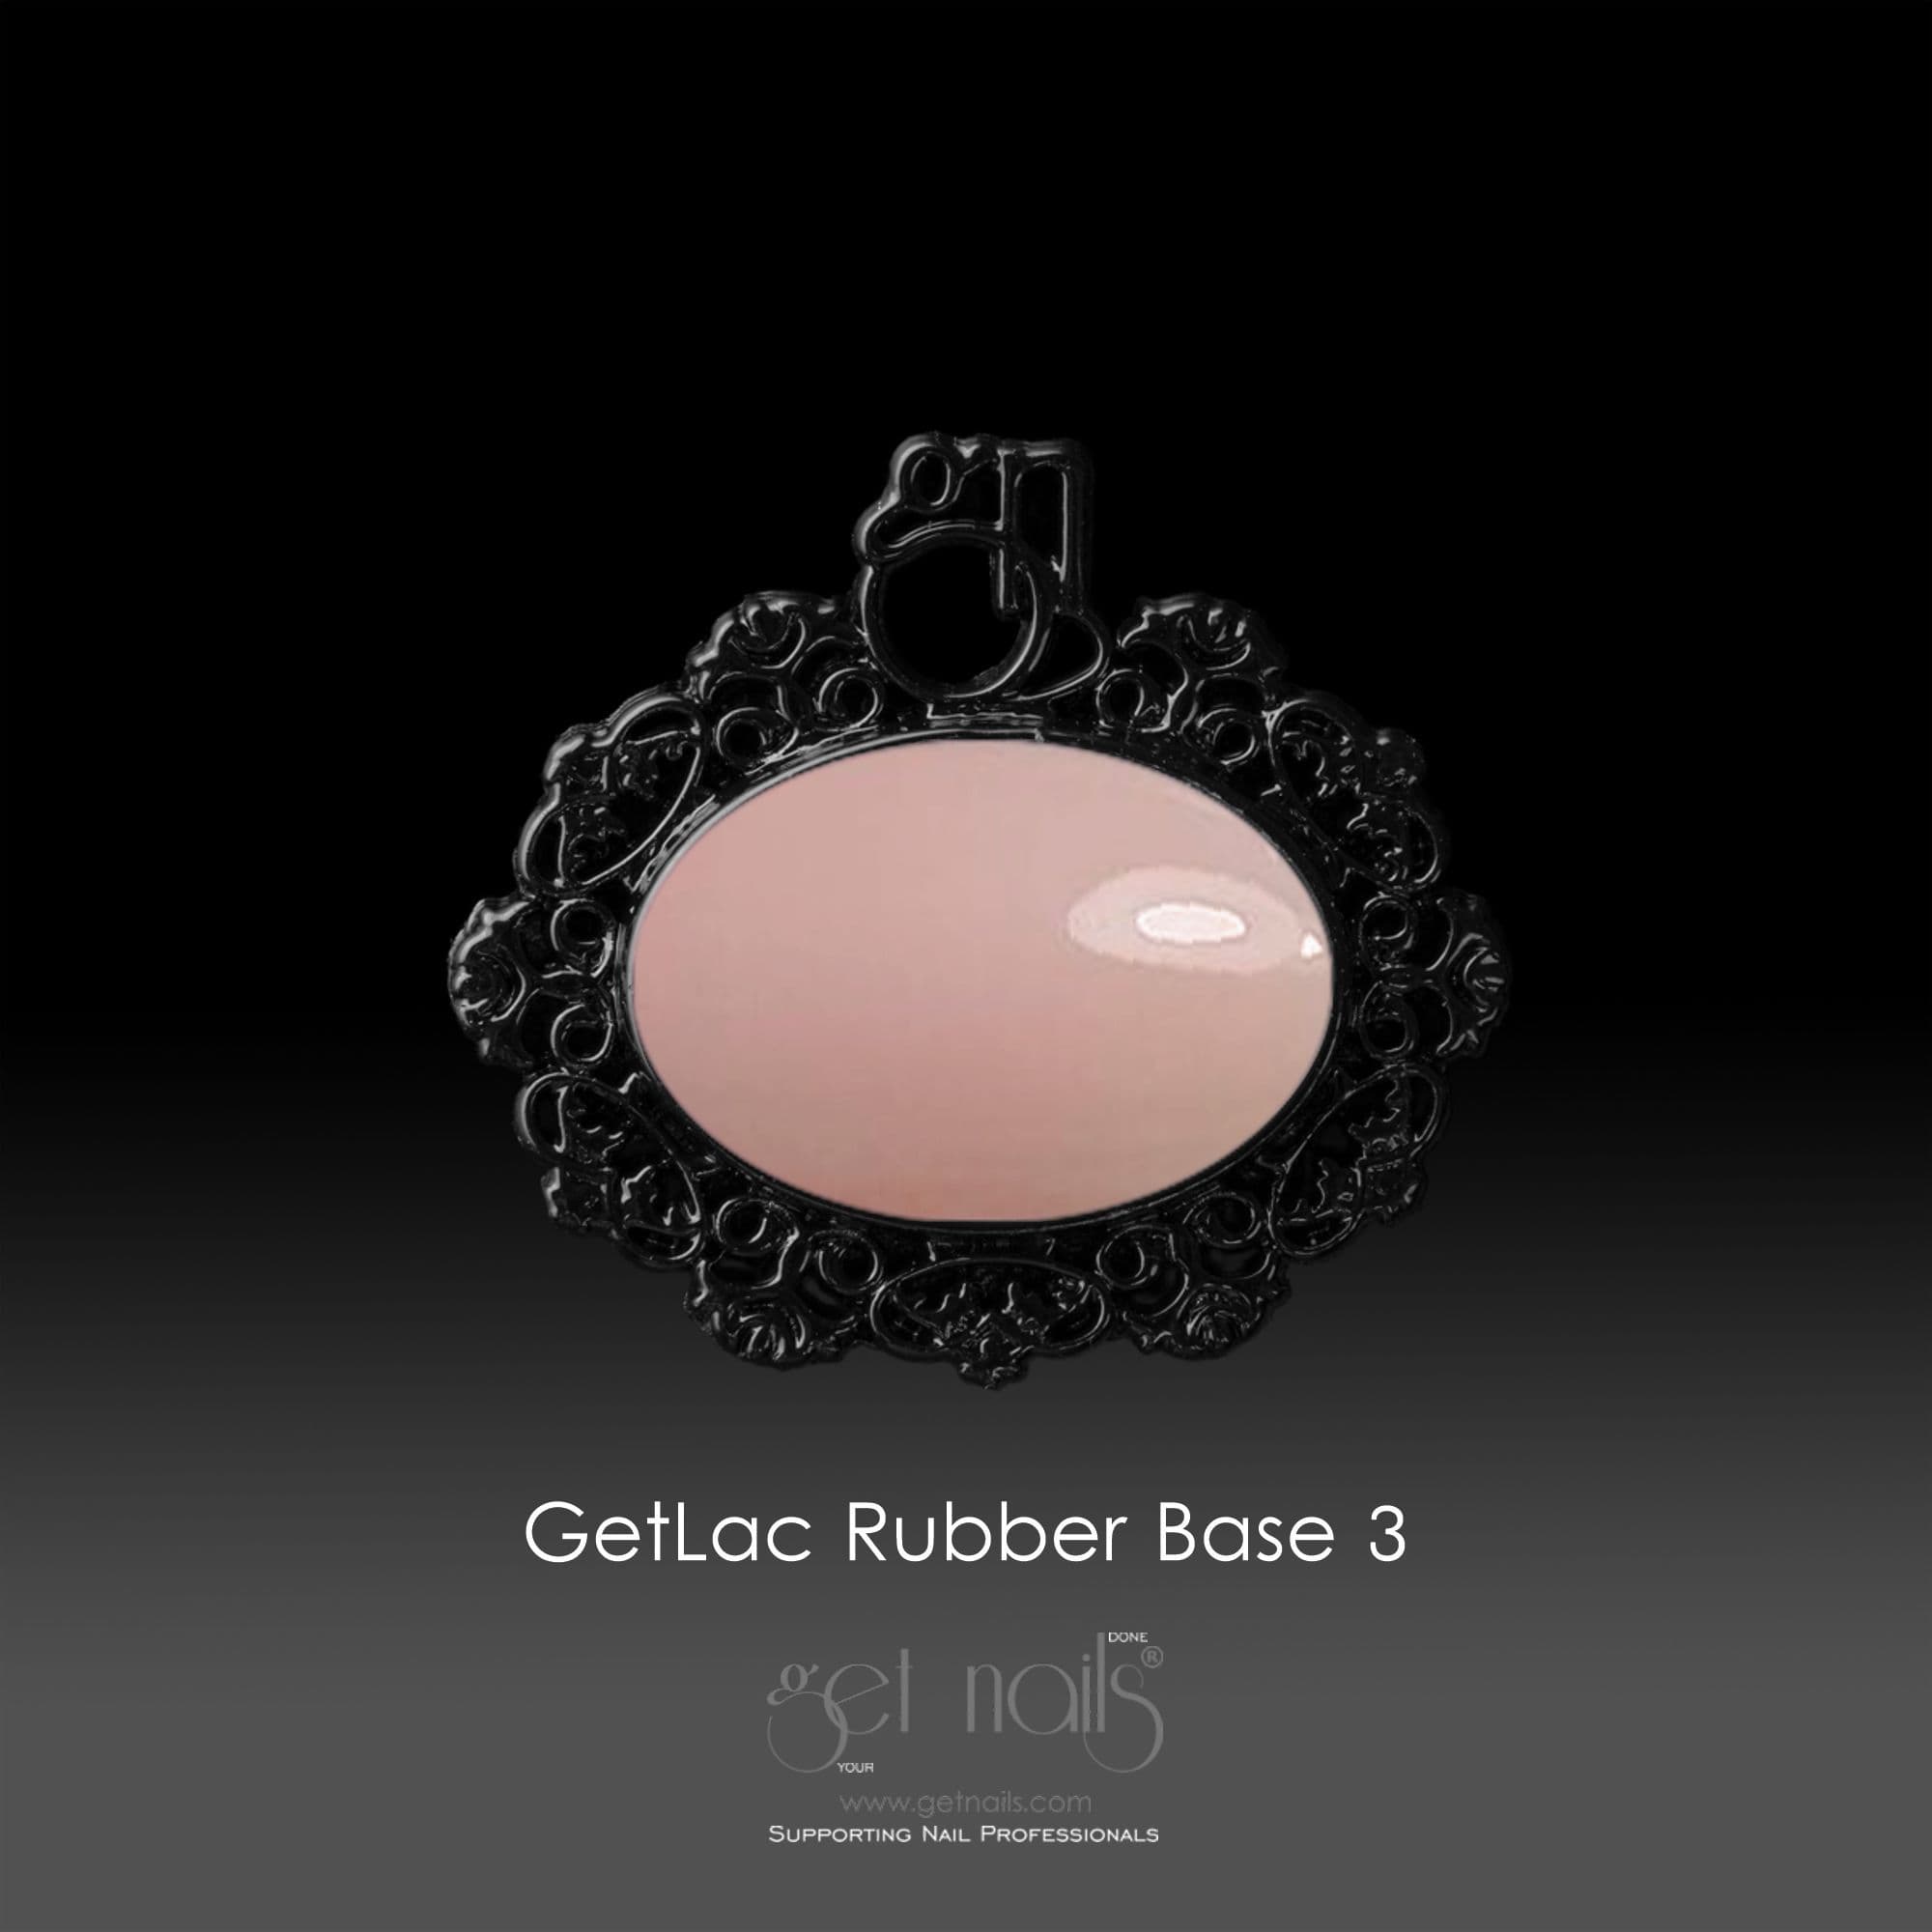 Get Nails Austrija - GetLac Rubber Base 3 15 g